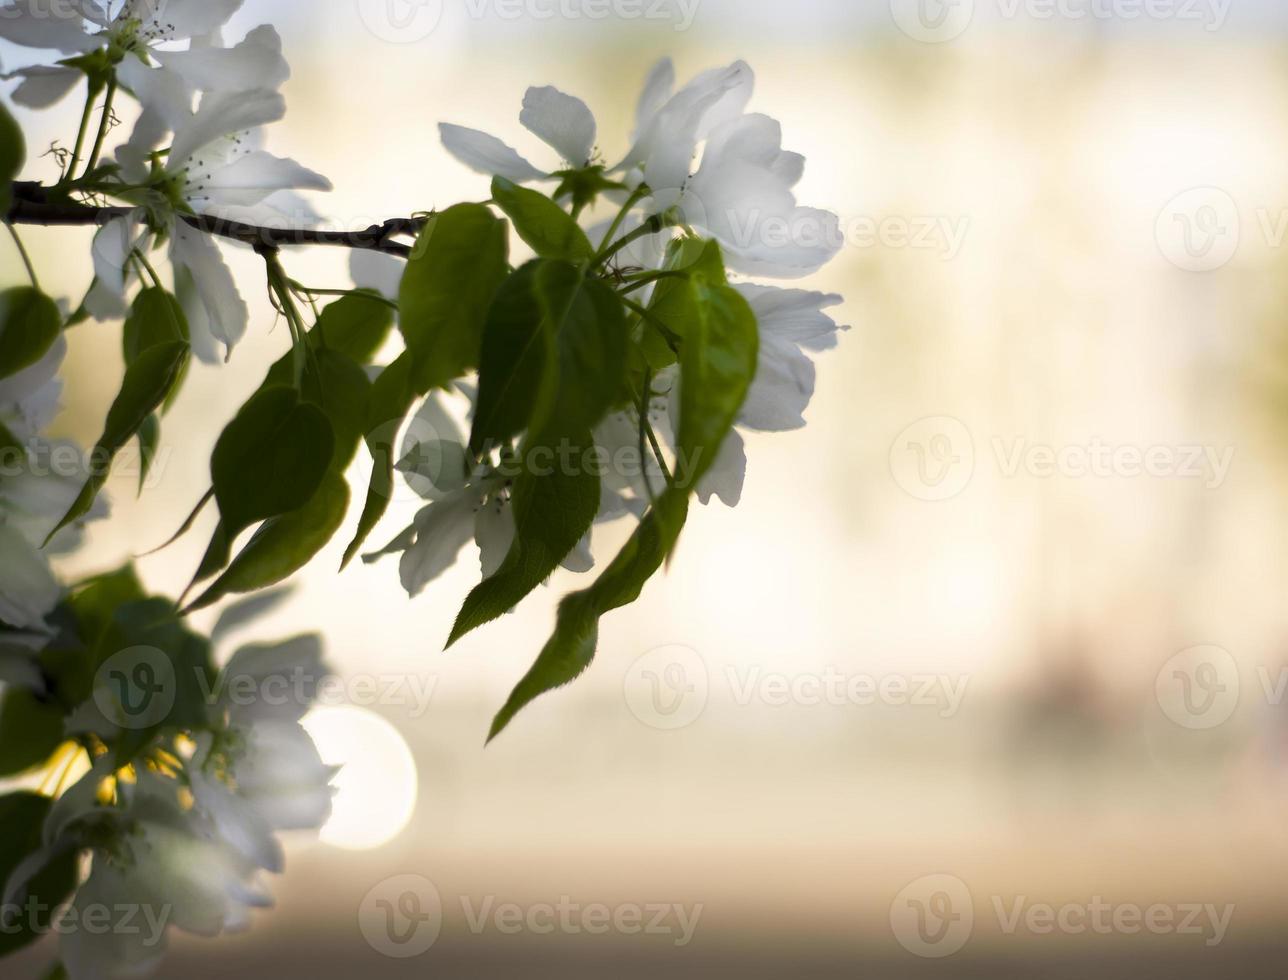 desenfocado floración manzana árbol rama. primavera. Bokeh. Copiar espacio para texto. foto